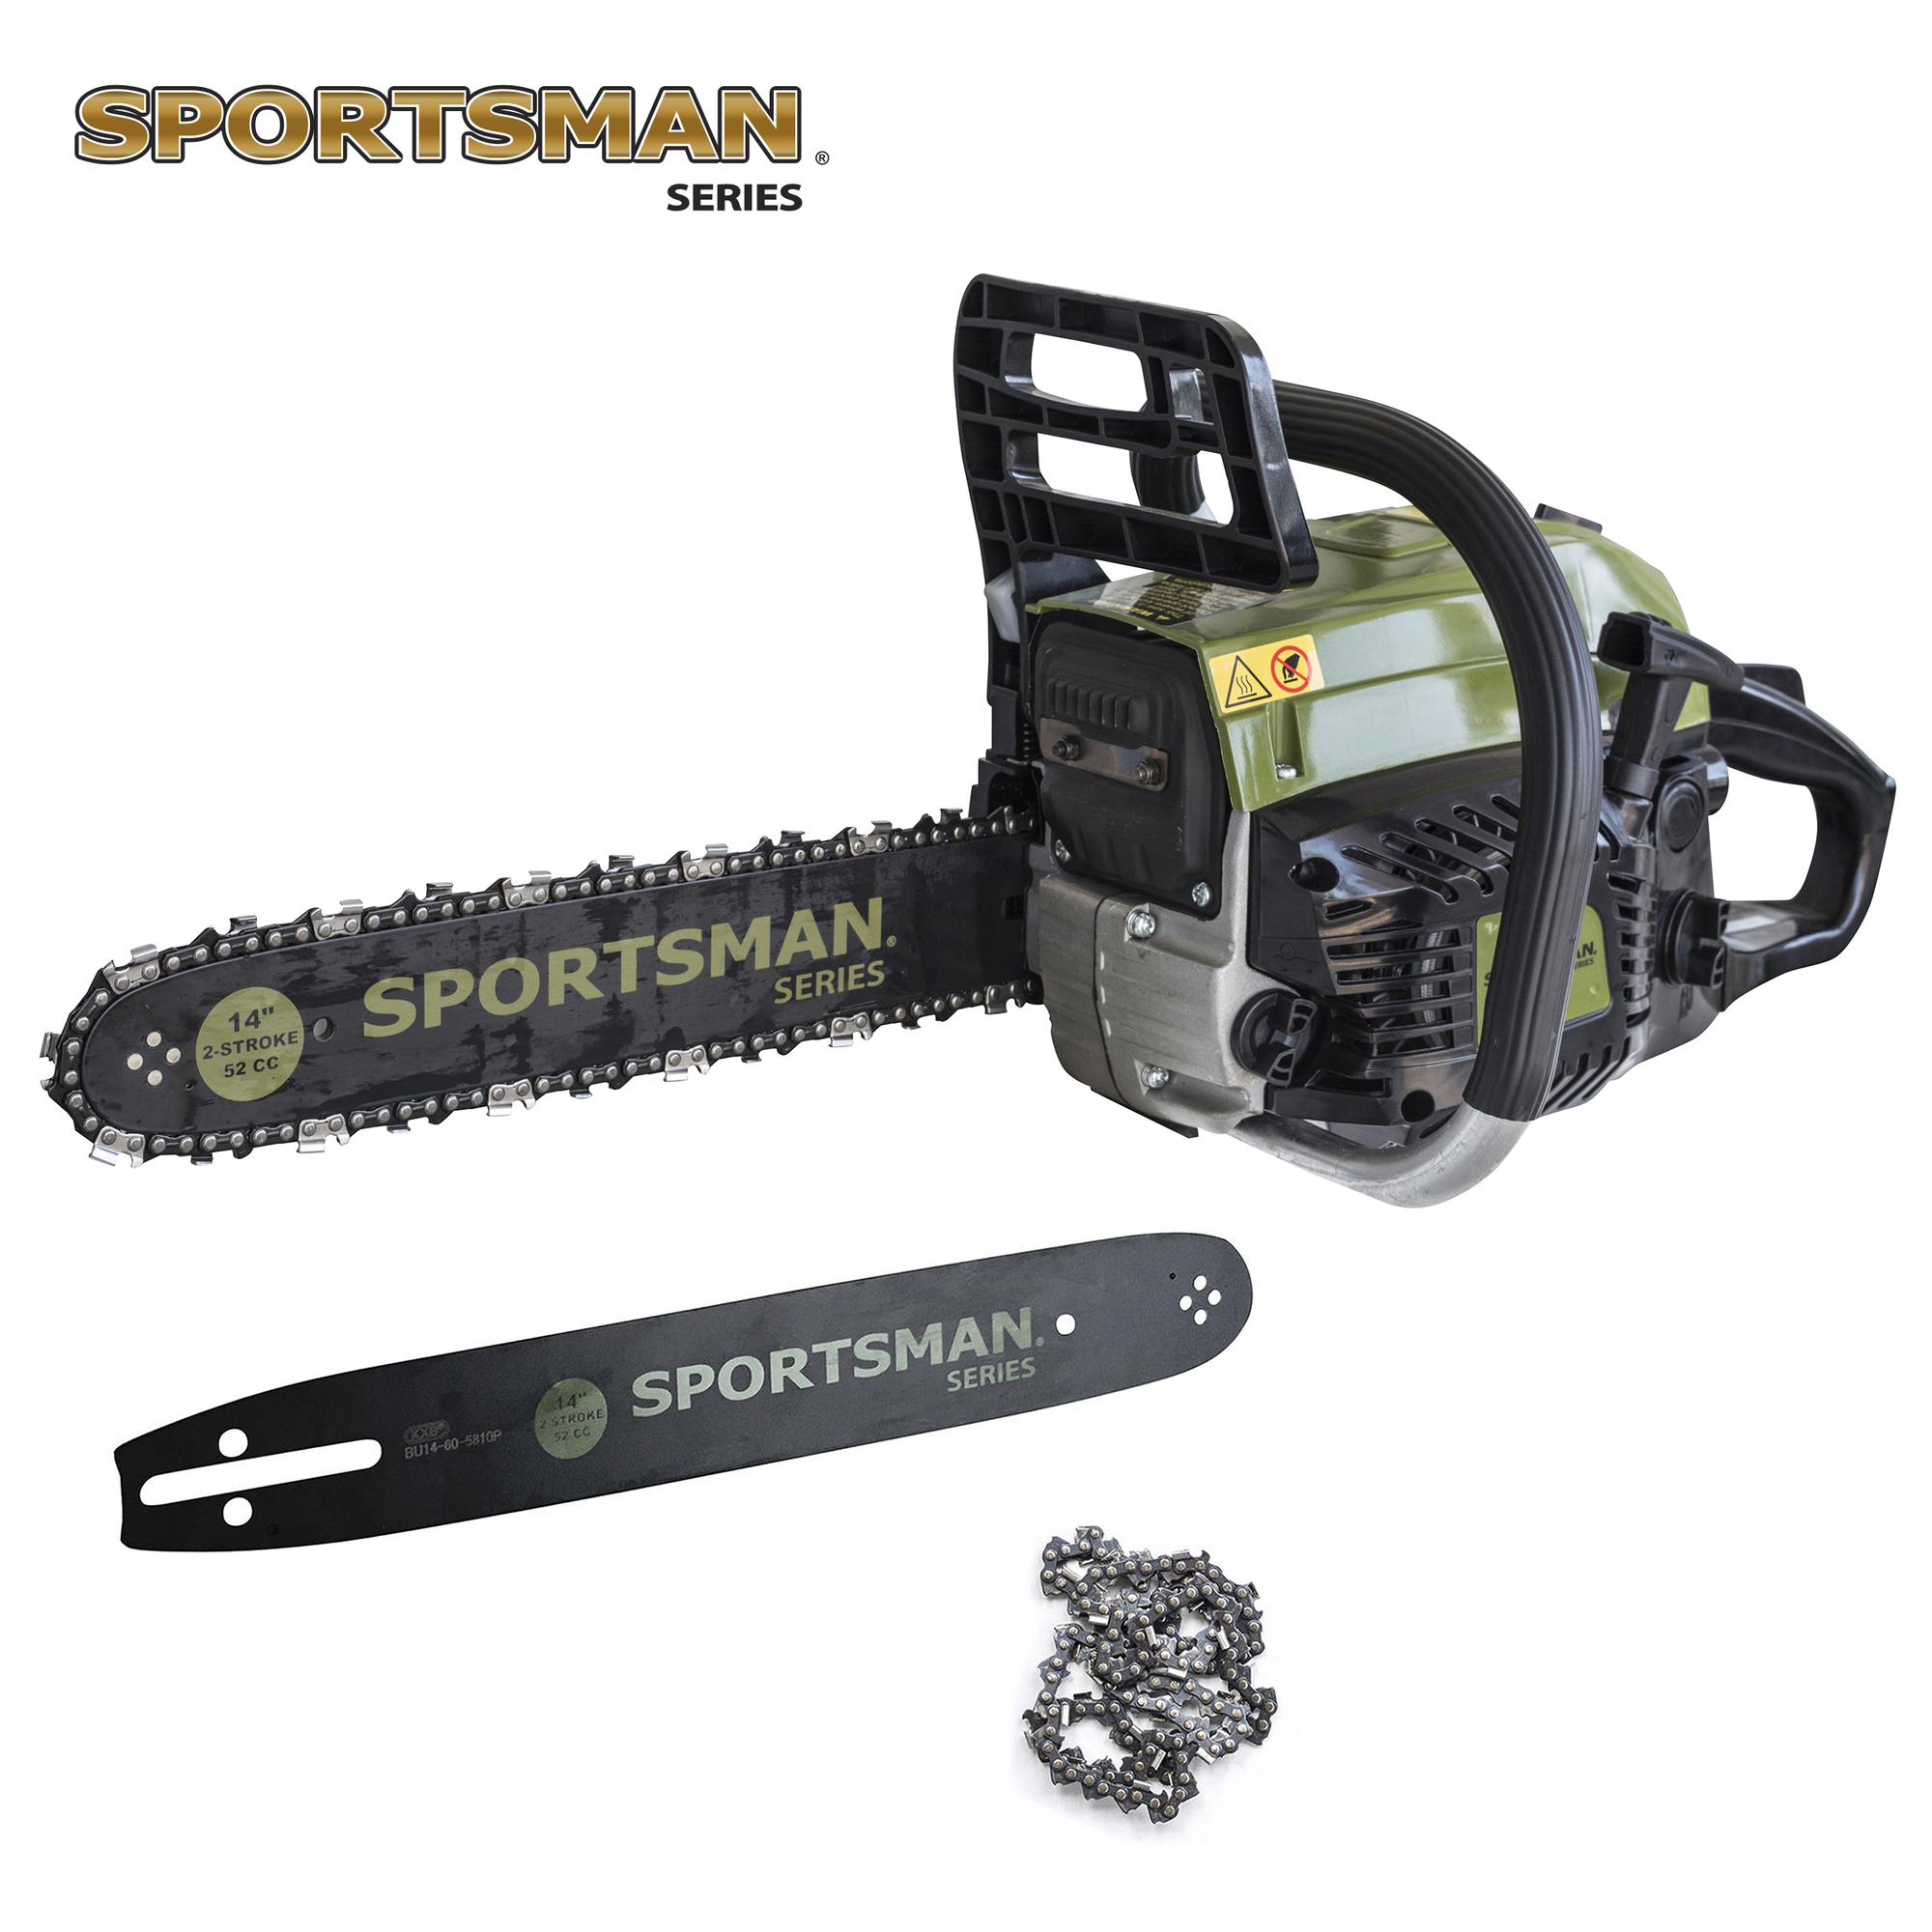 Sportsman Series, Gas 2-Stroke Rear Handle Chainsaw Combo Kit, Bar Length 20 in, Model GCS522014